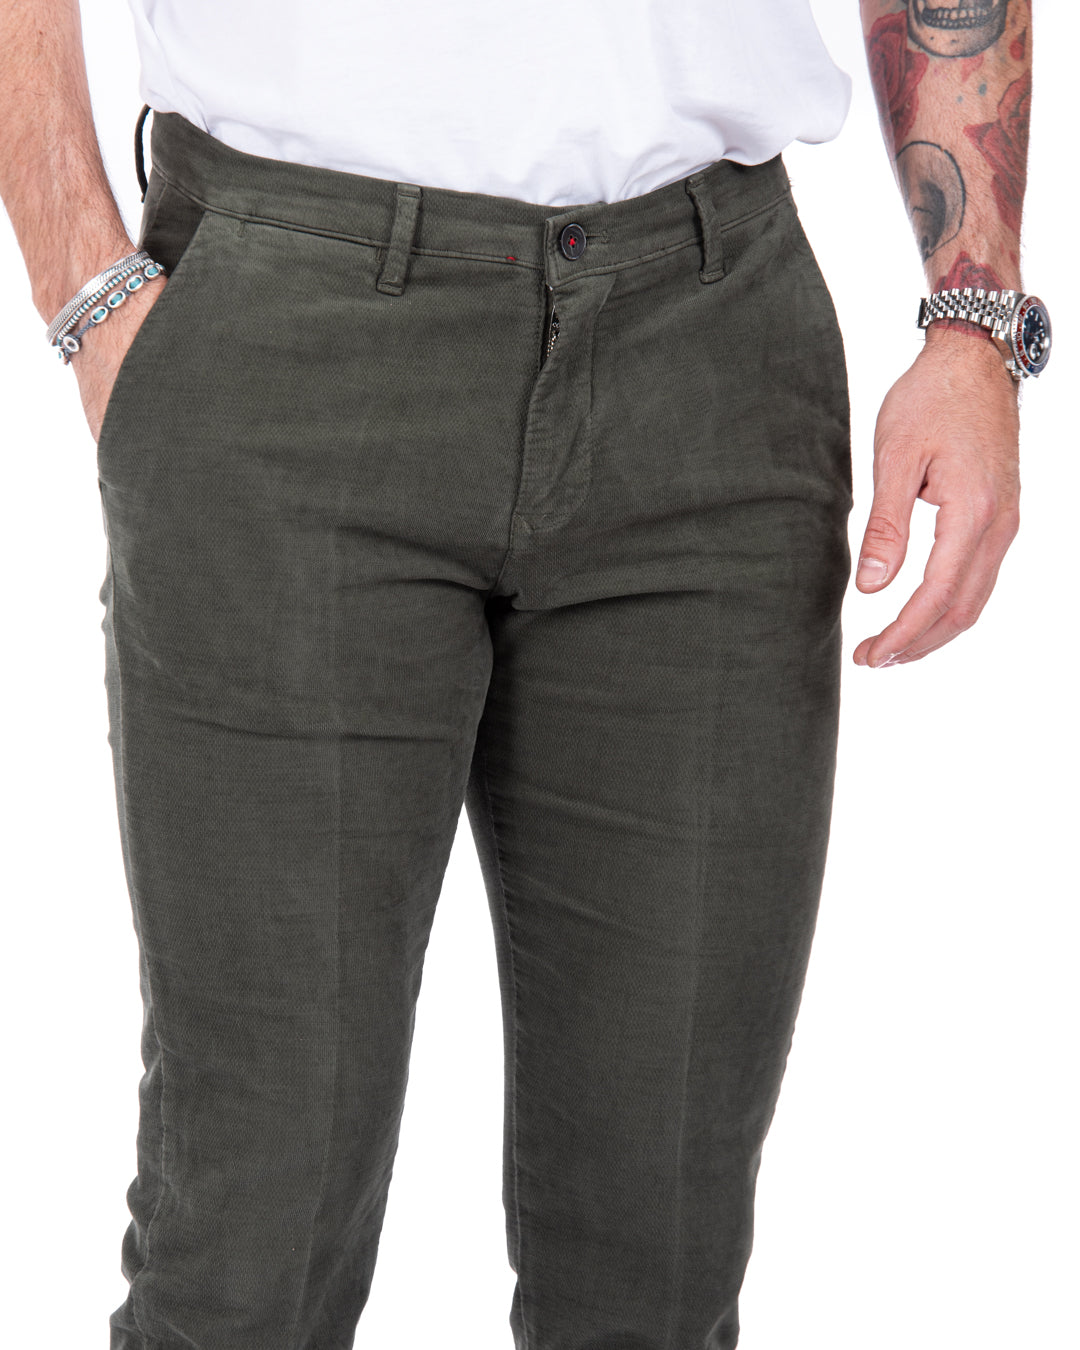 Job - military moleskin trousers